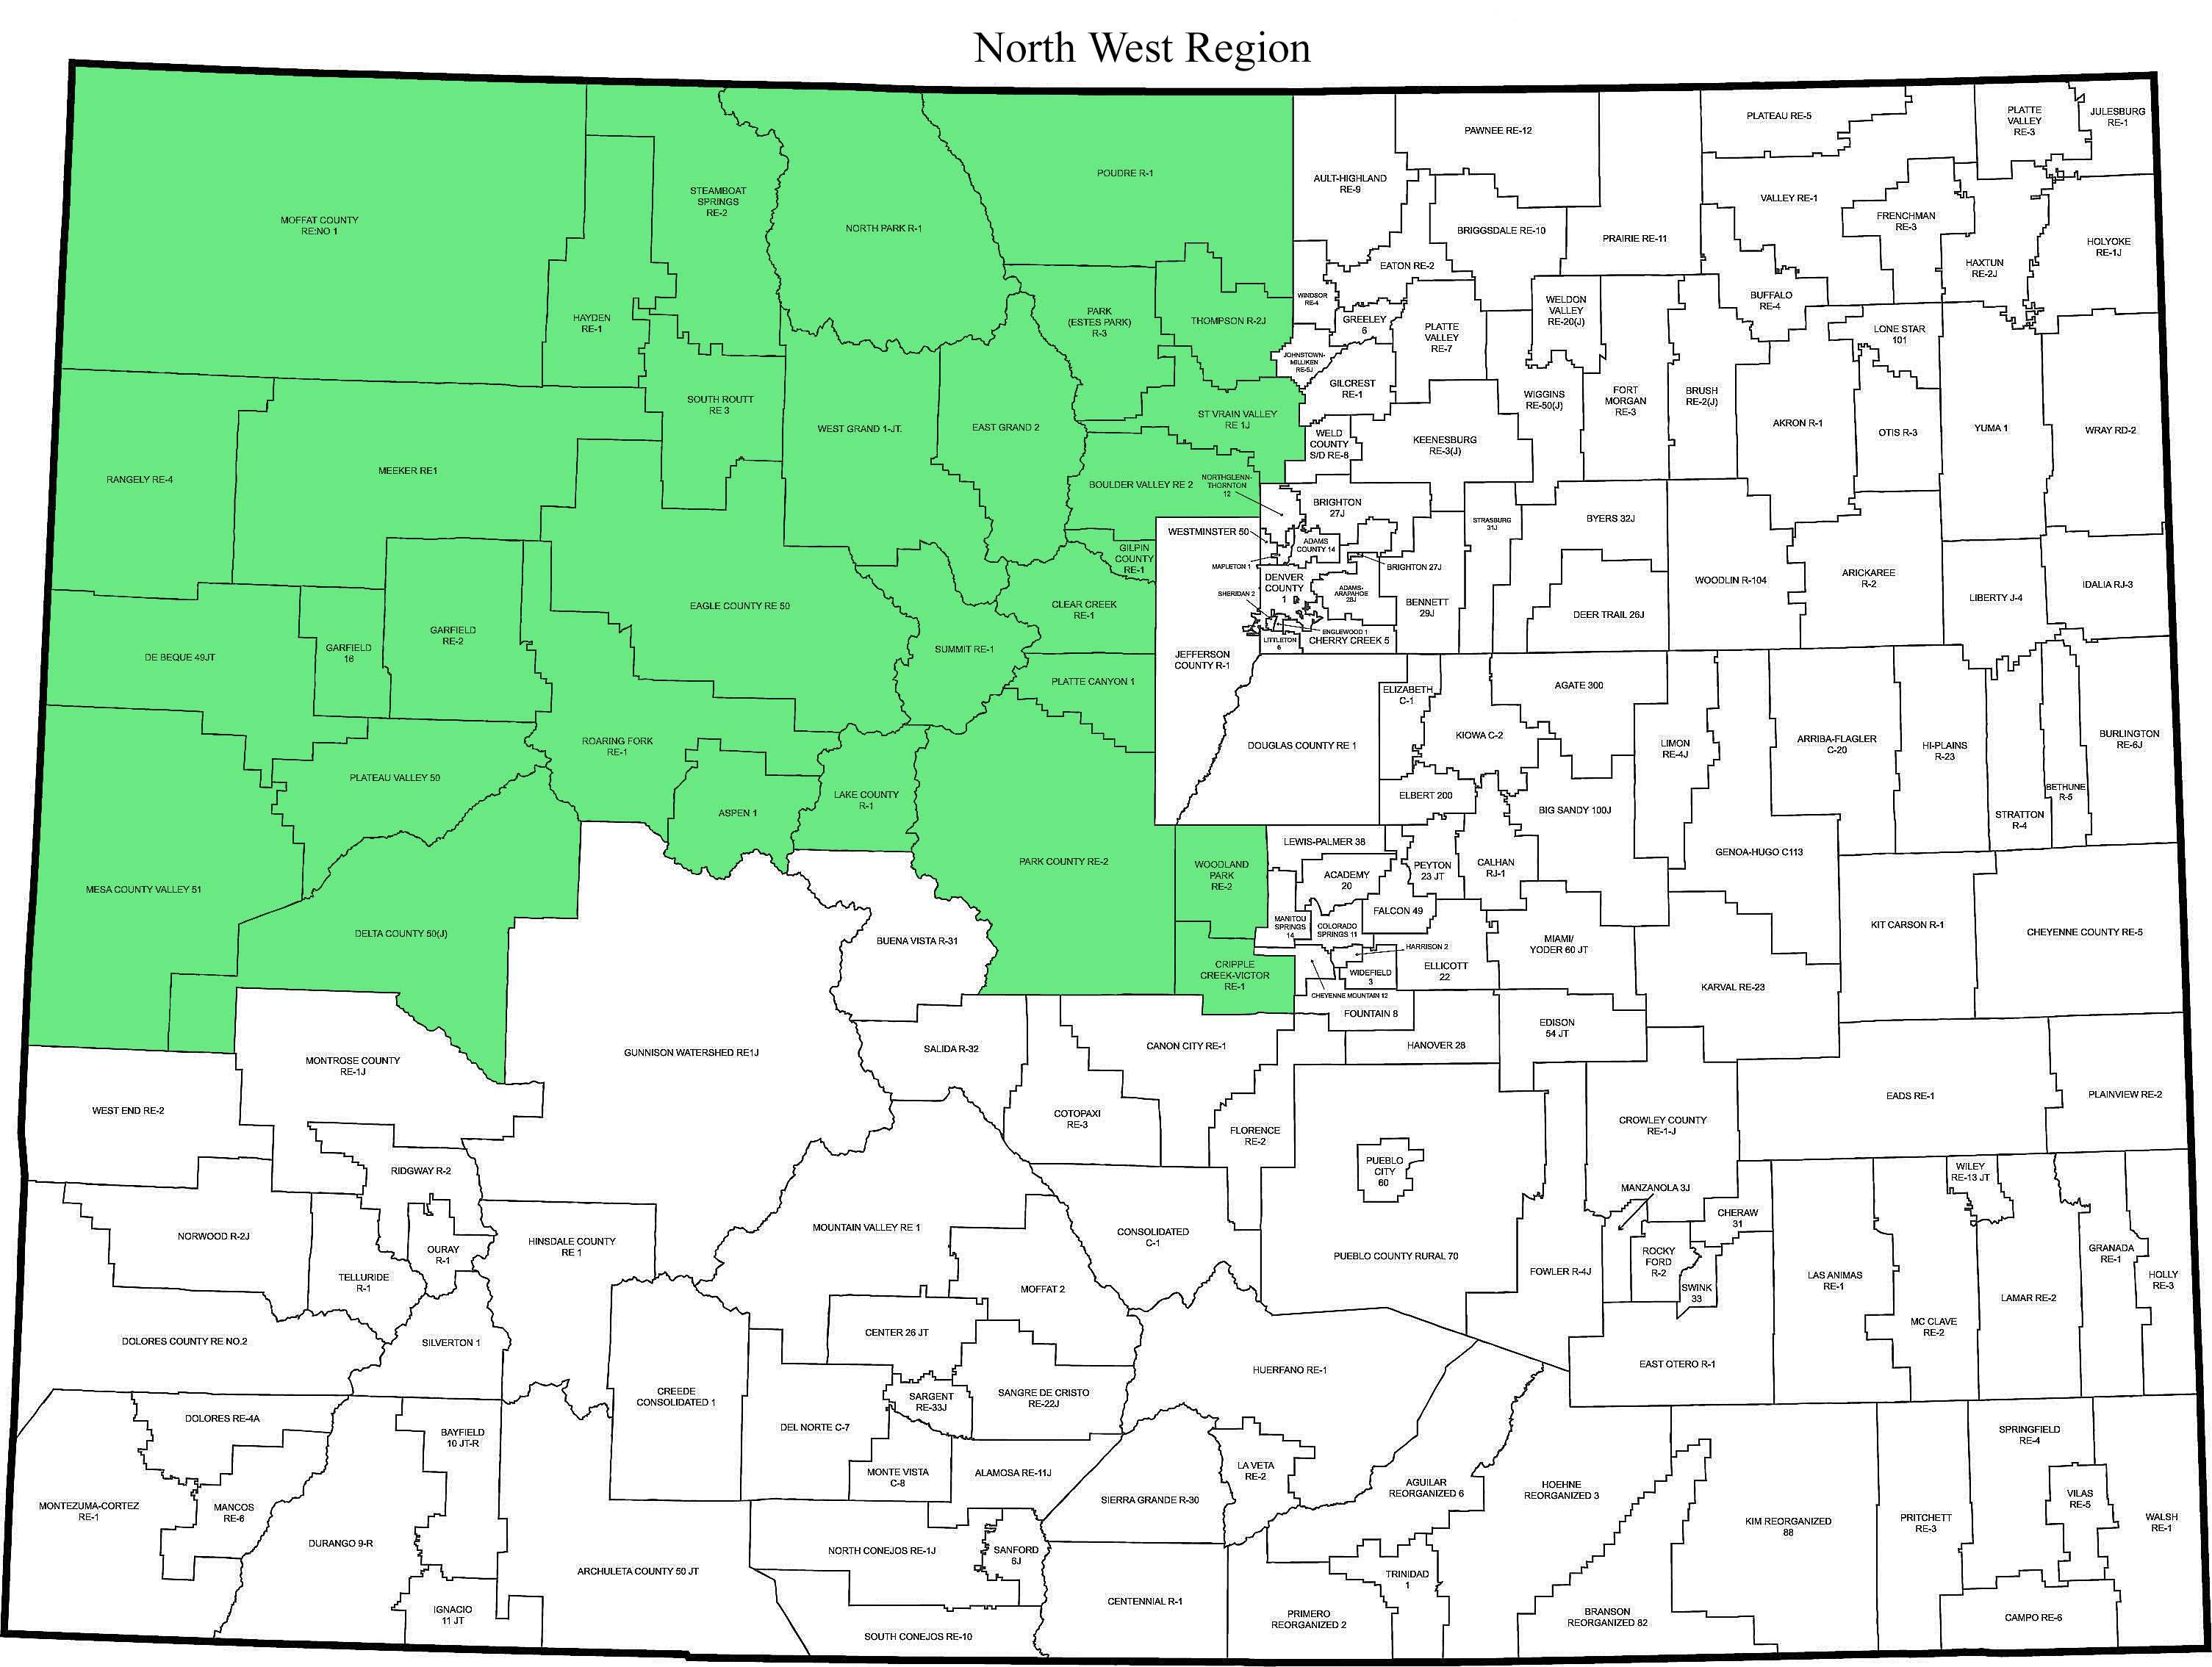 Northwest Region of Colorado